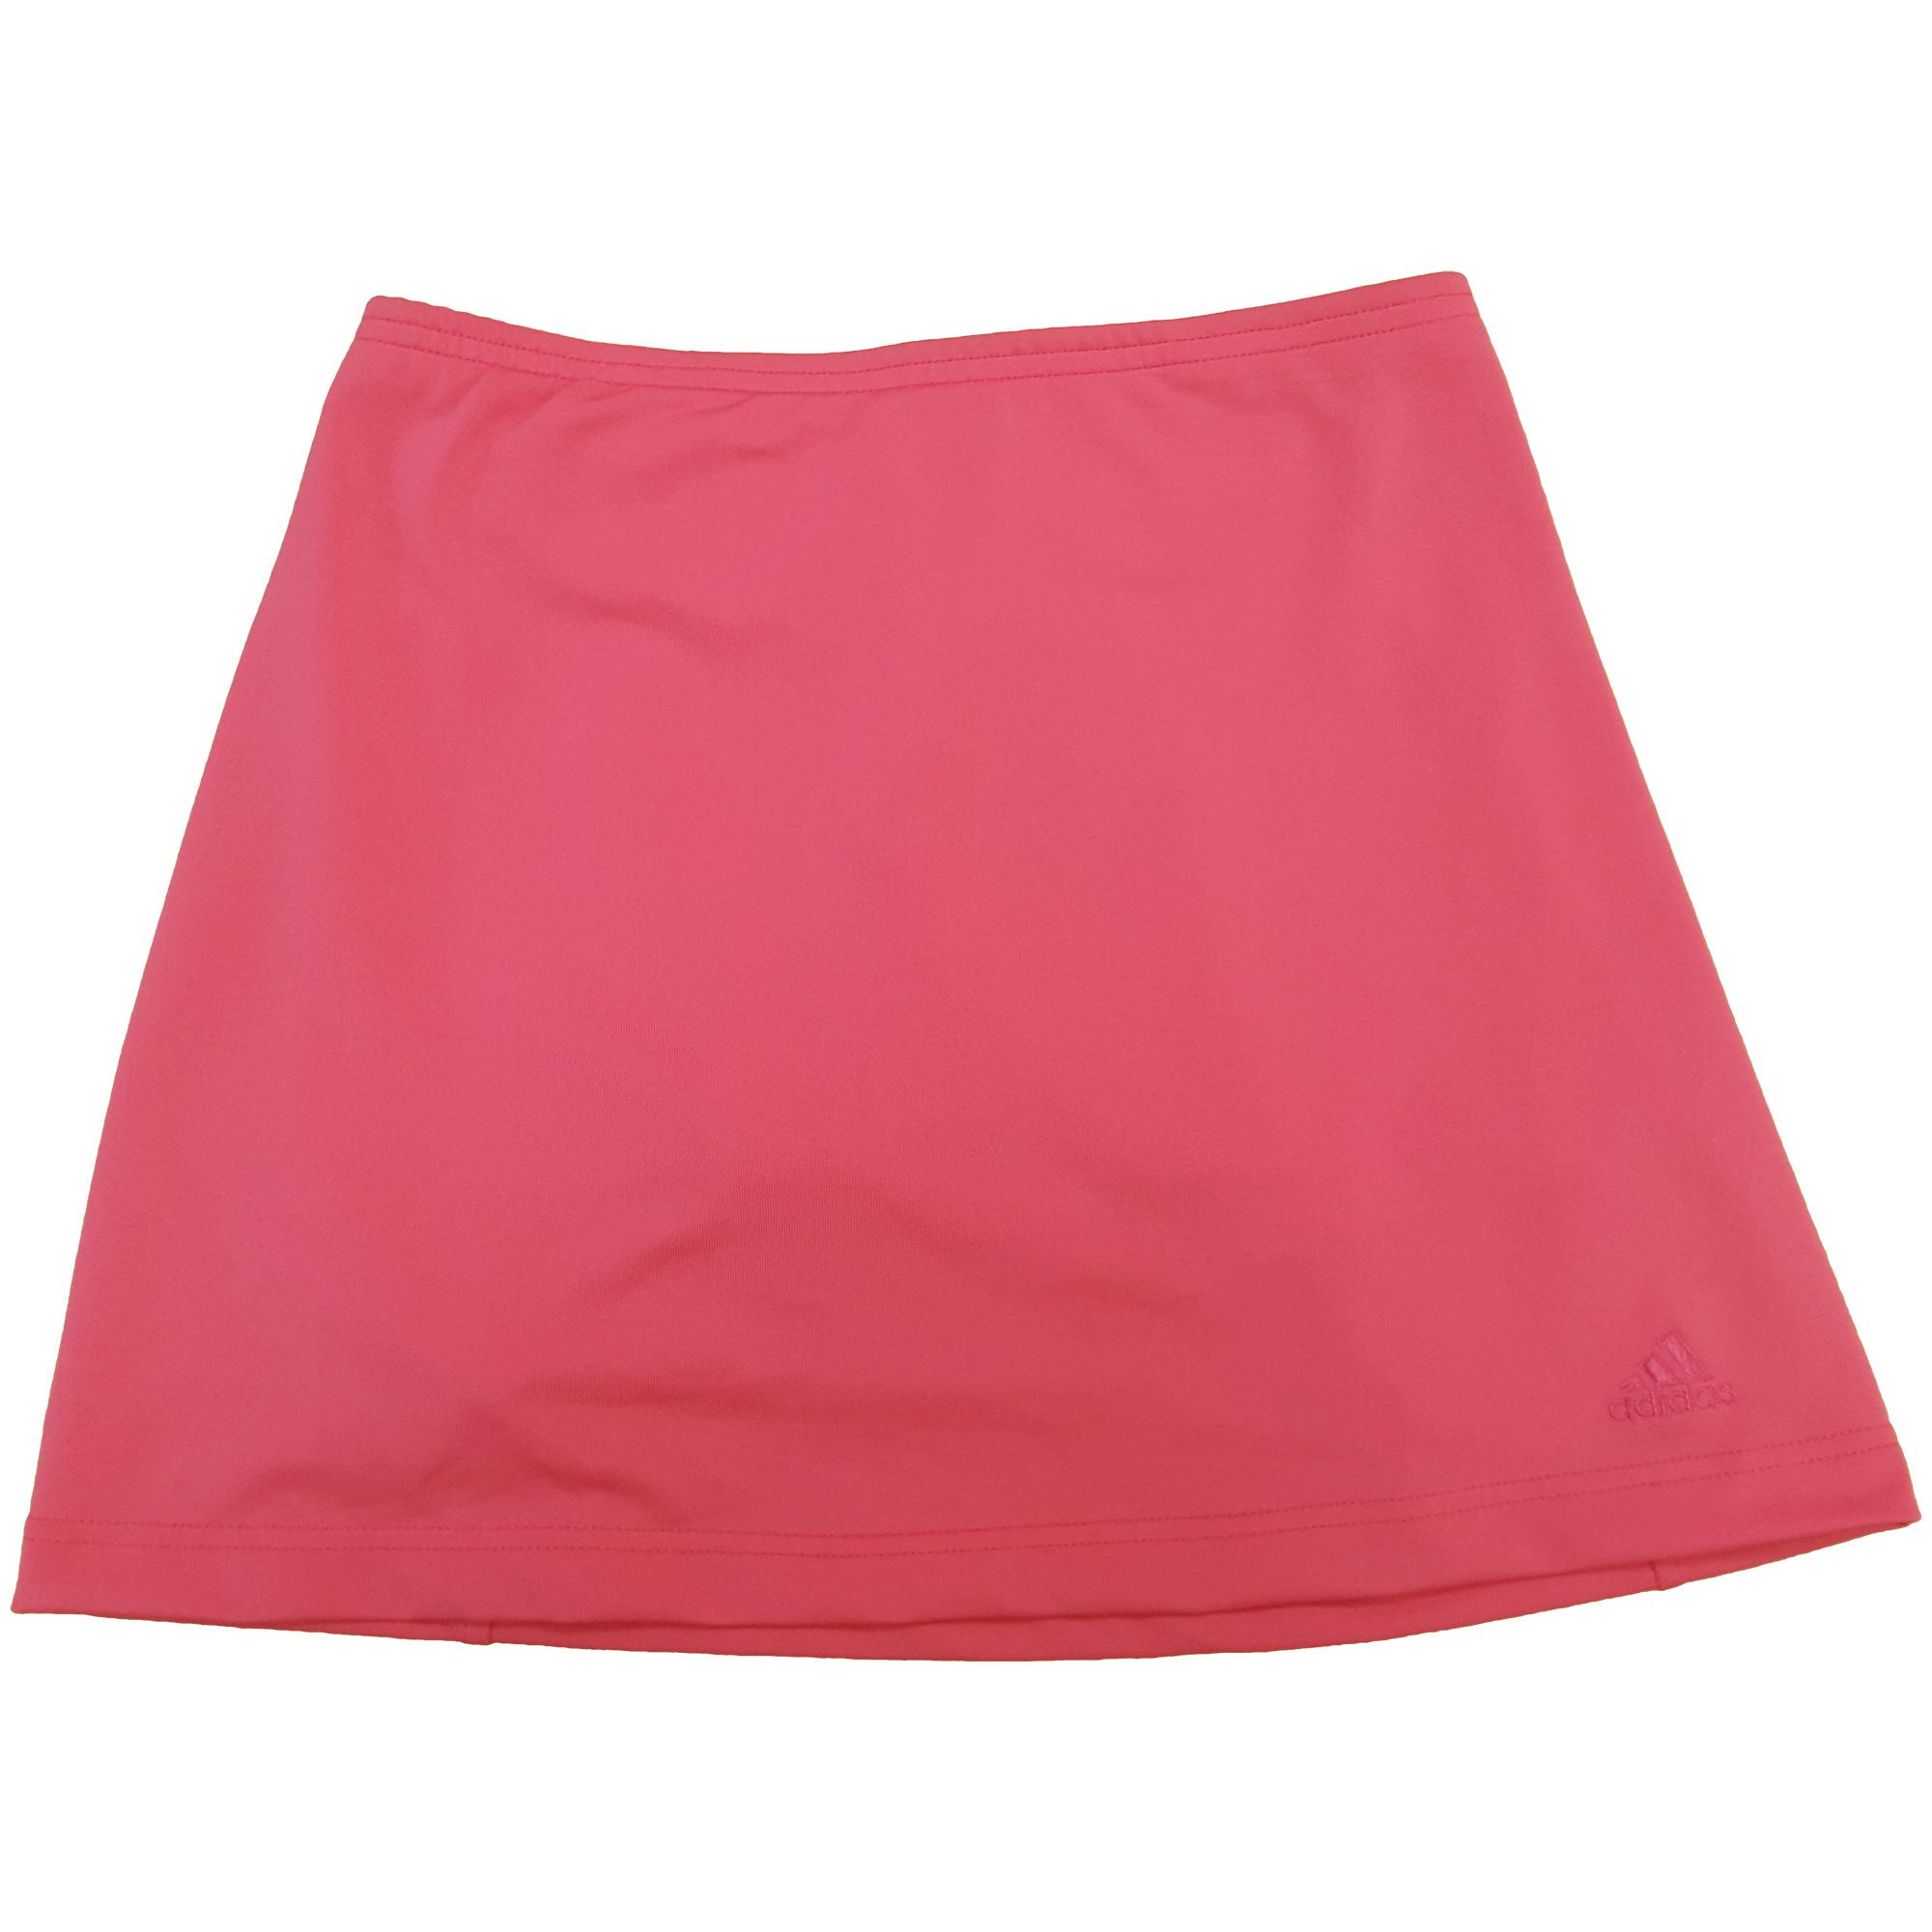 Adidas Girl Synergy Skirt - Pink - Tennisnuts.com